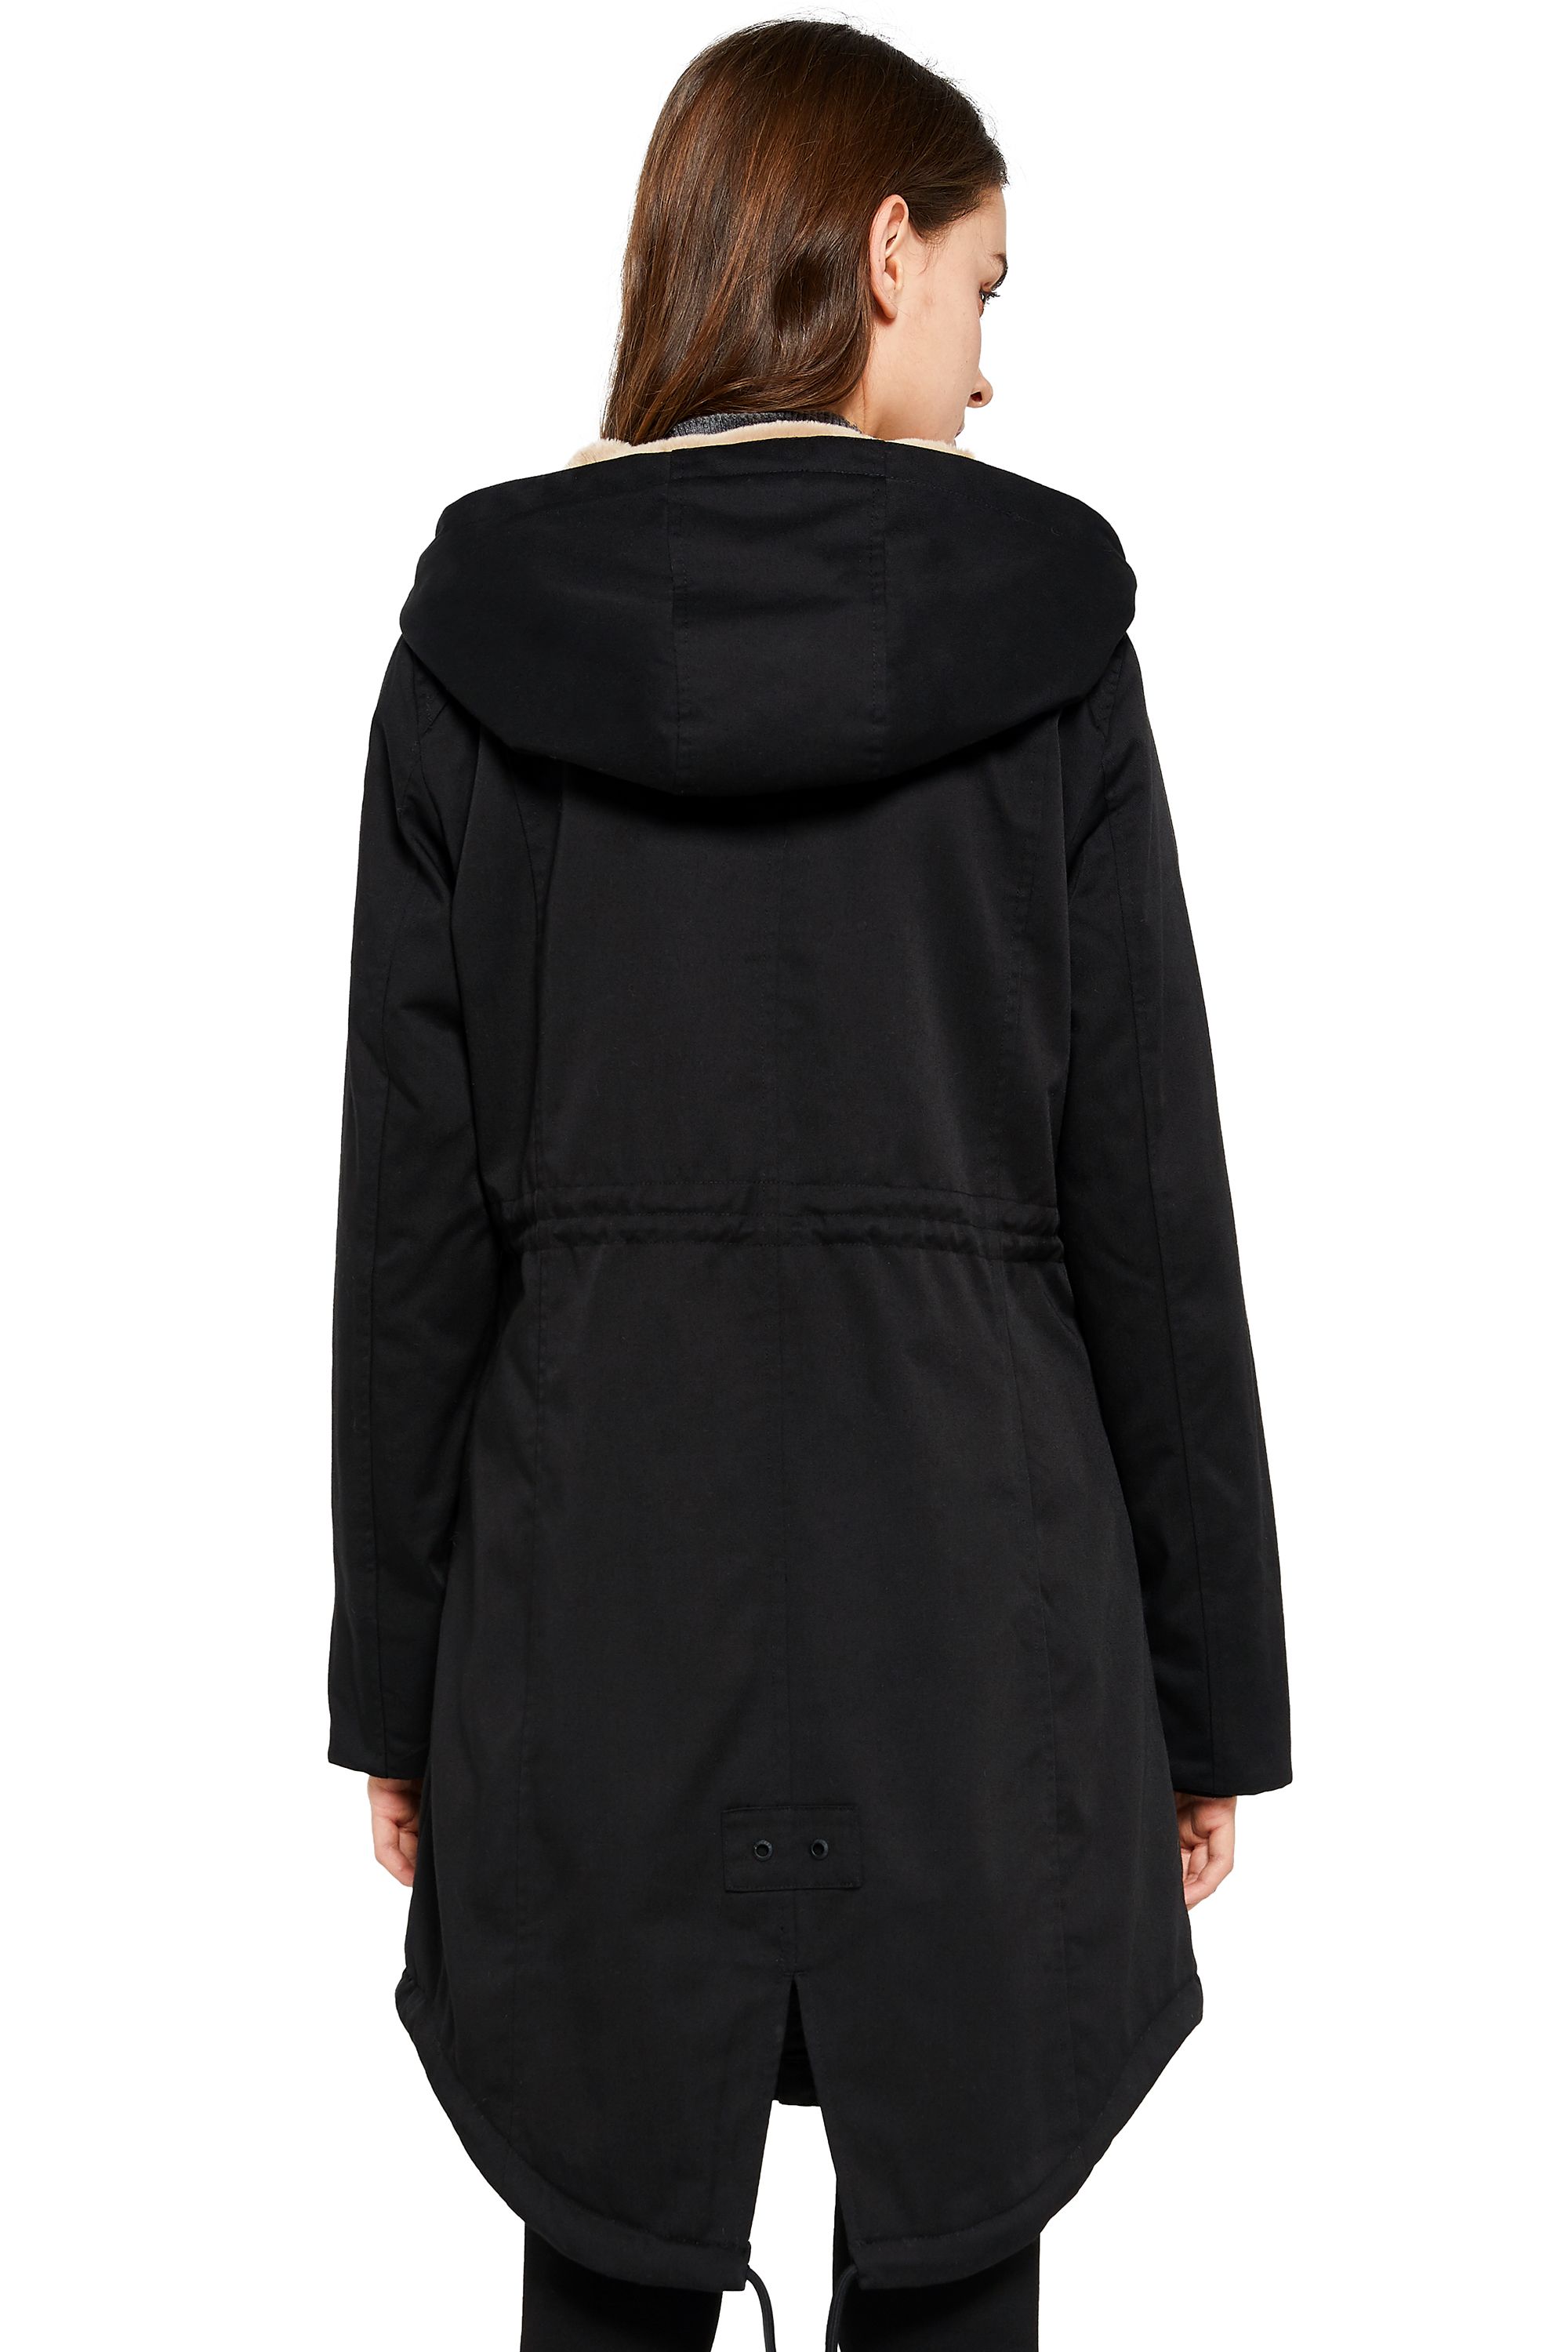 Orolay Women's Winter Parka Fleece Parka Warm Winter Coat Hoodie Jacket Mid length Winter Jacket Black XL - image 2 of 5